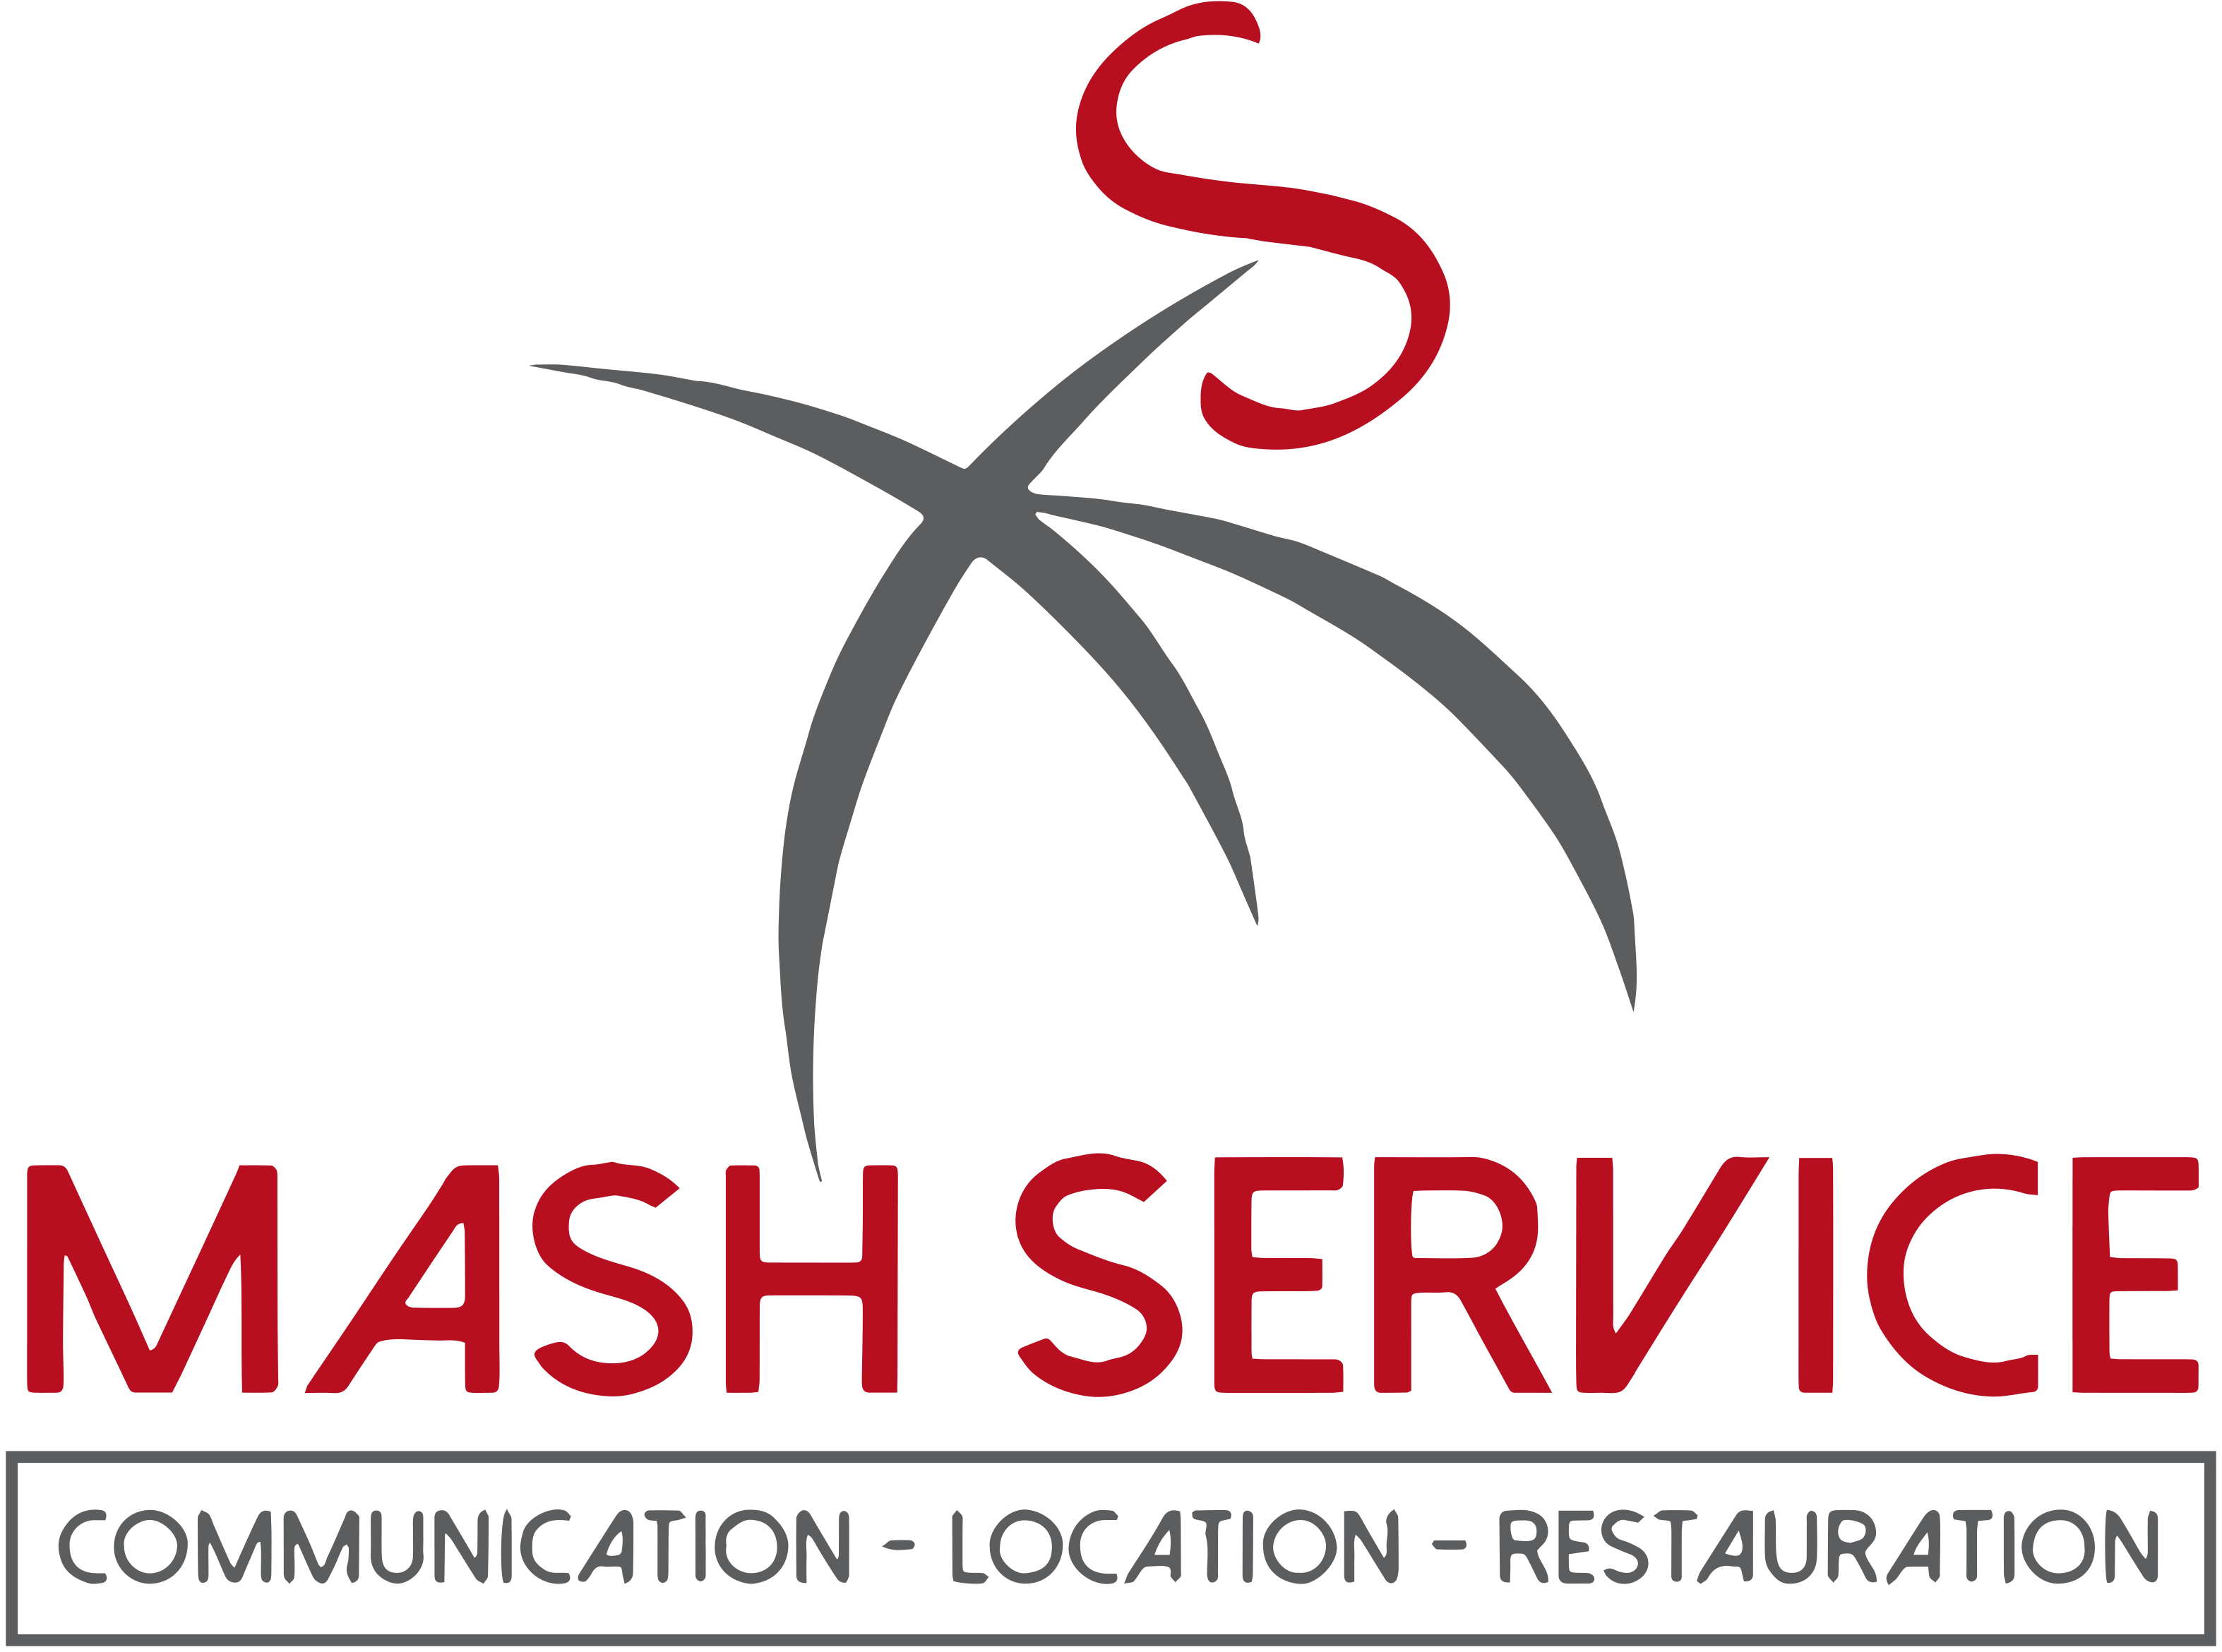 Mash SERVICE